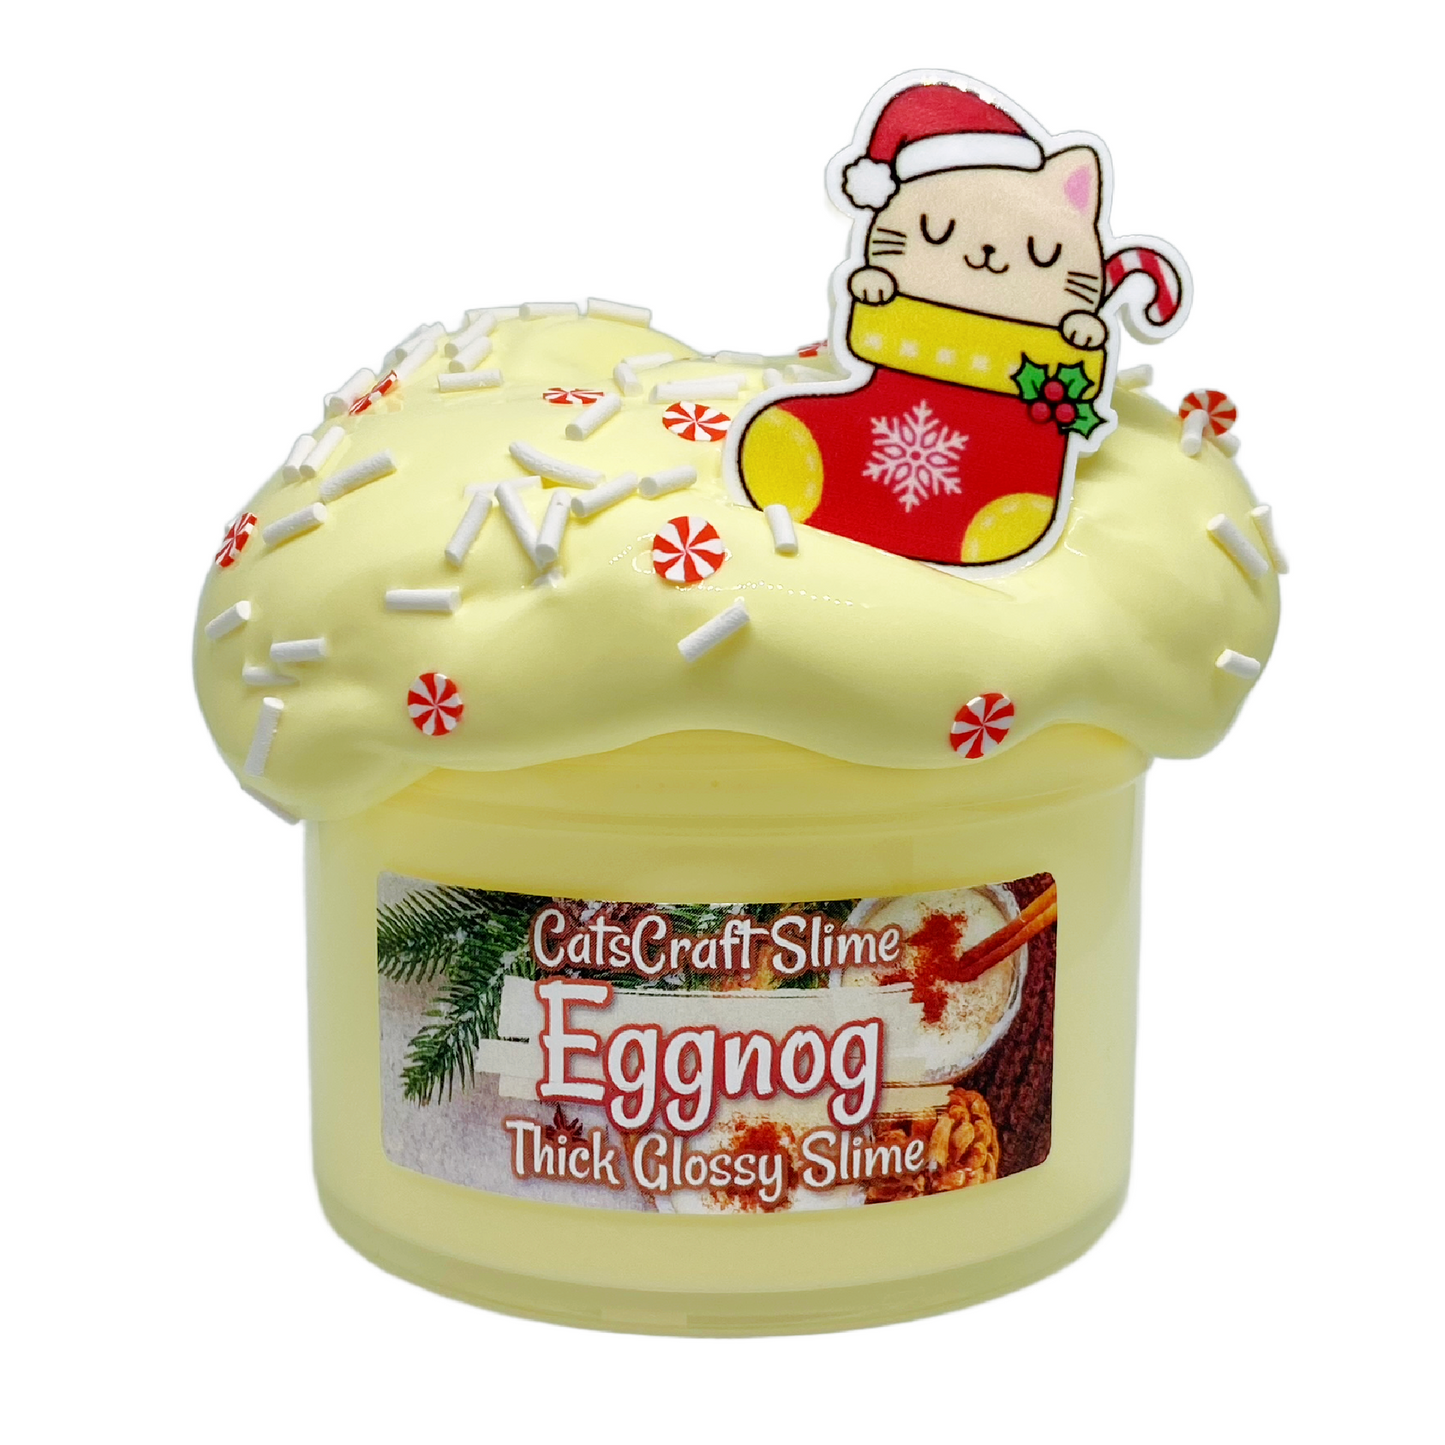 Thick Glossy Slime "Eggnog" SCENTED ASMR Charm Fimos Christmas